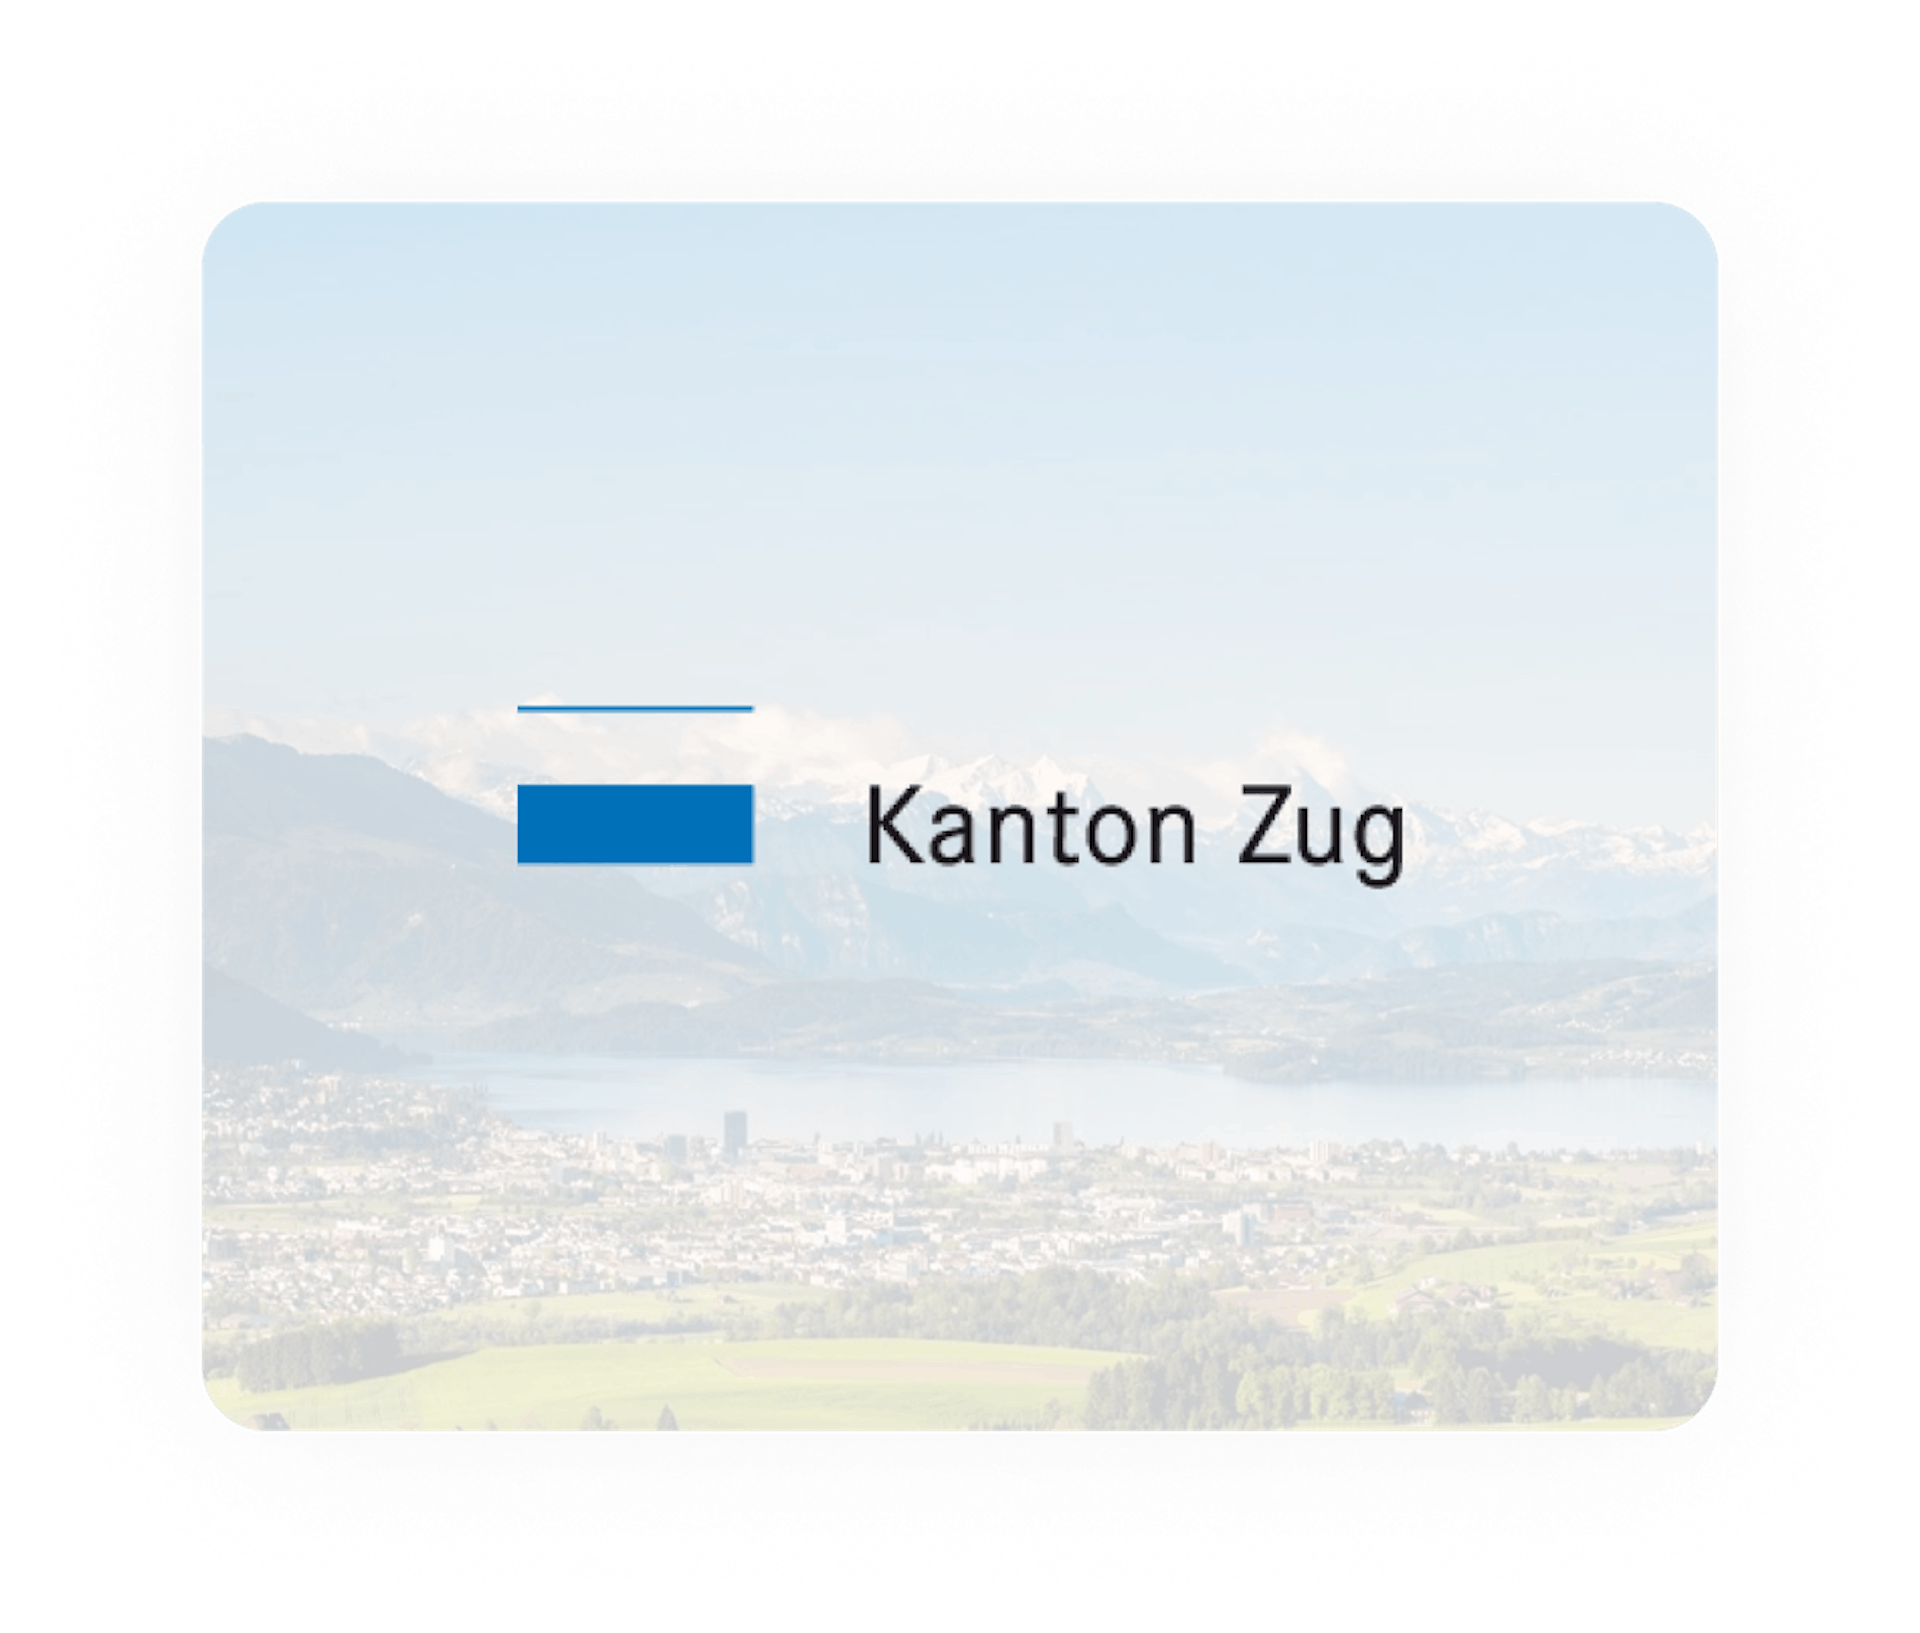 canton of zug logo 